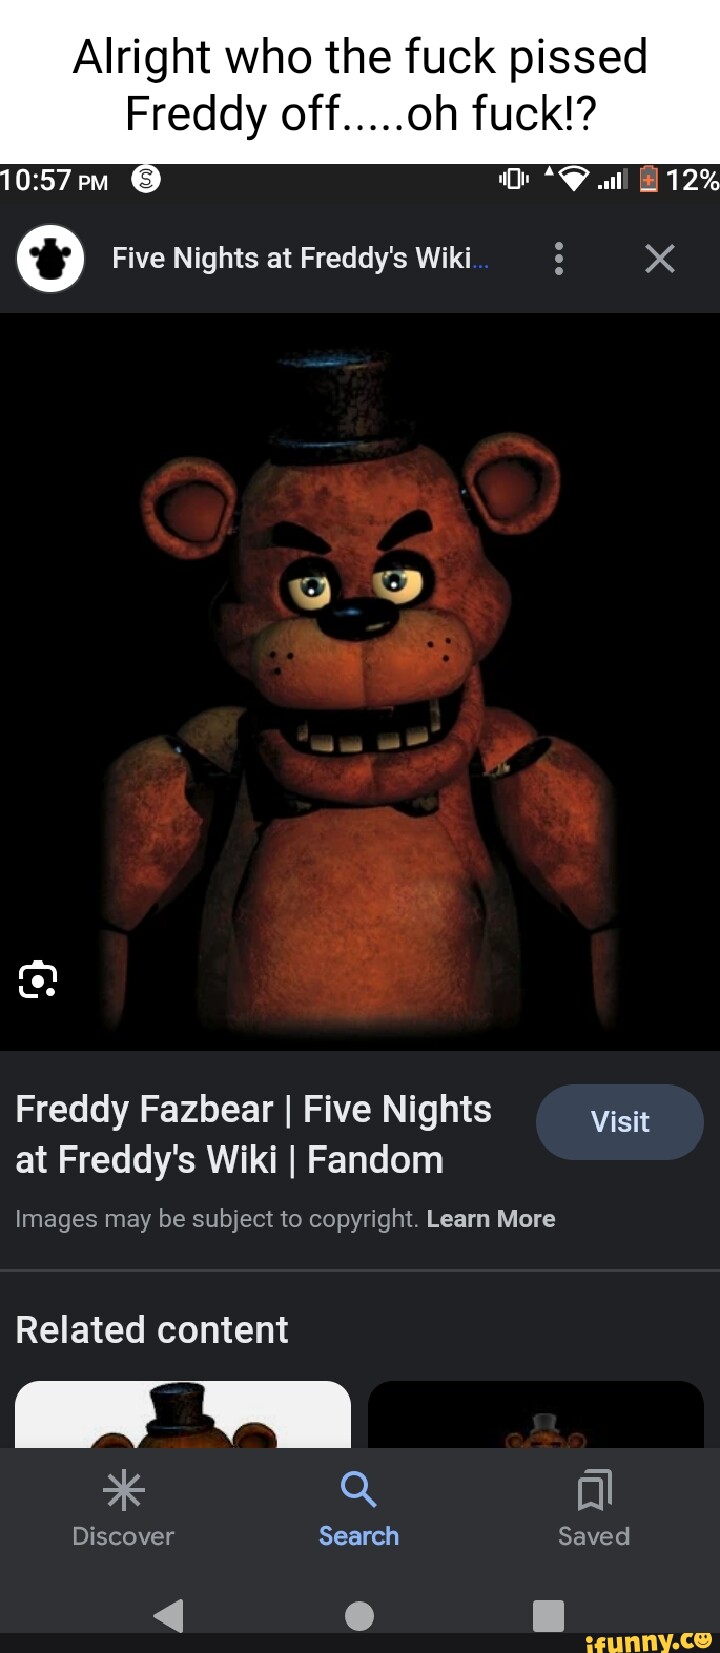 Freddy Fazbear, Five Nights at Freddy's Wiki, Fandom